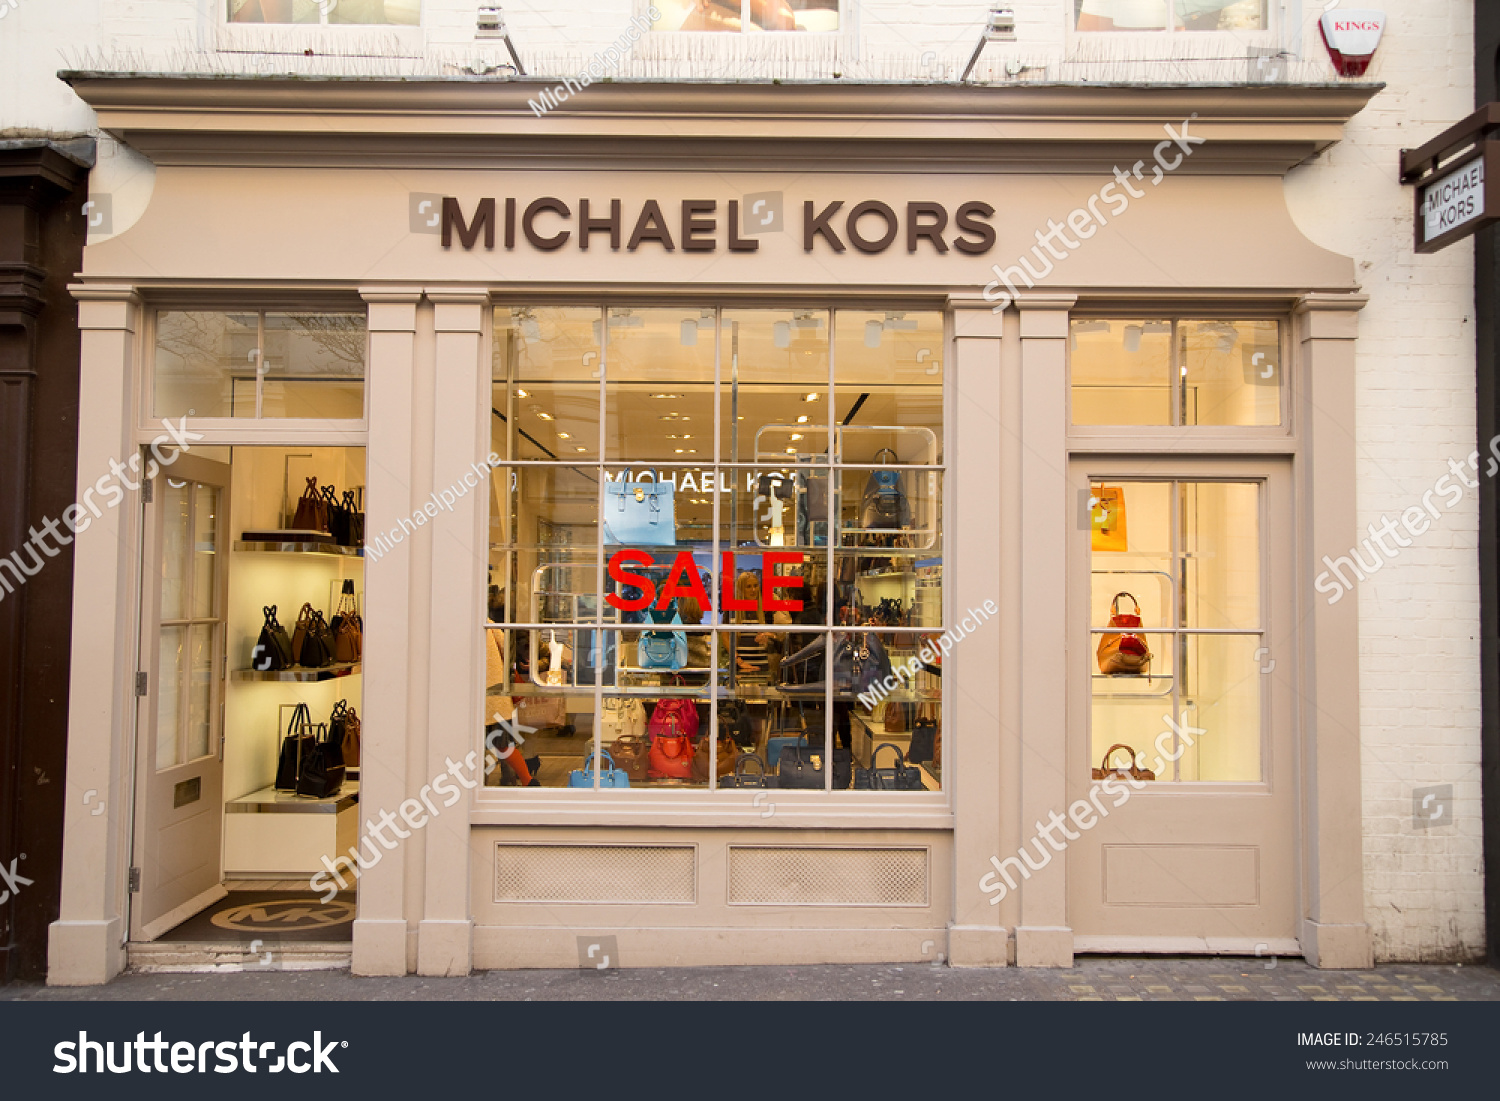 michael kors shop london uk